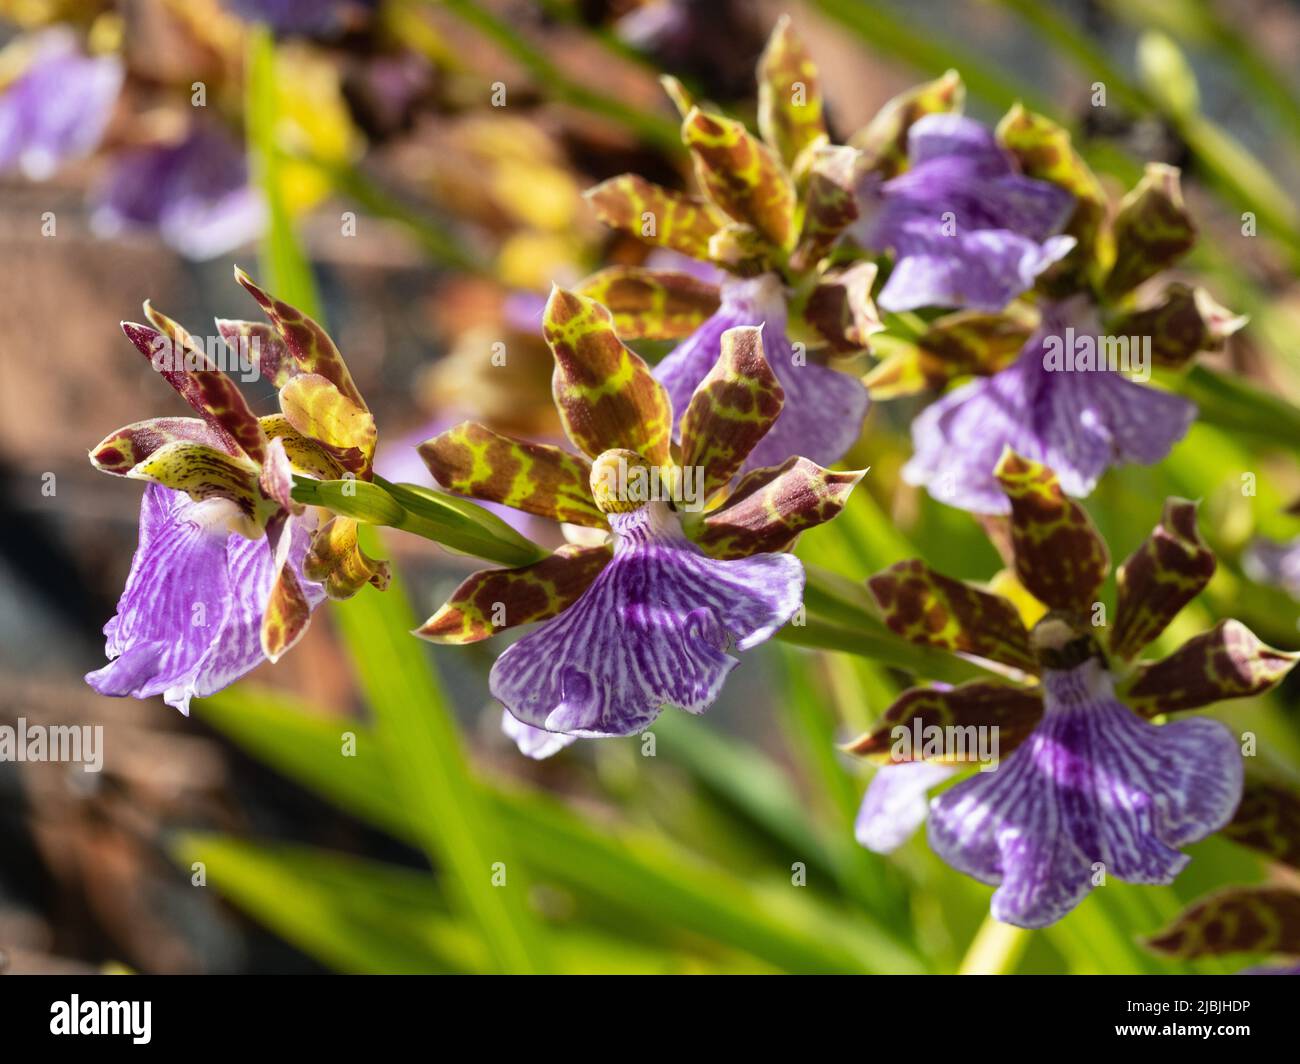 Orchid flowers, purple stripy patterned Zygopetalum Orchids blooming in an sunlit Australian Coastal Garden, blurred background Stock Photo